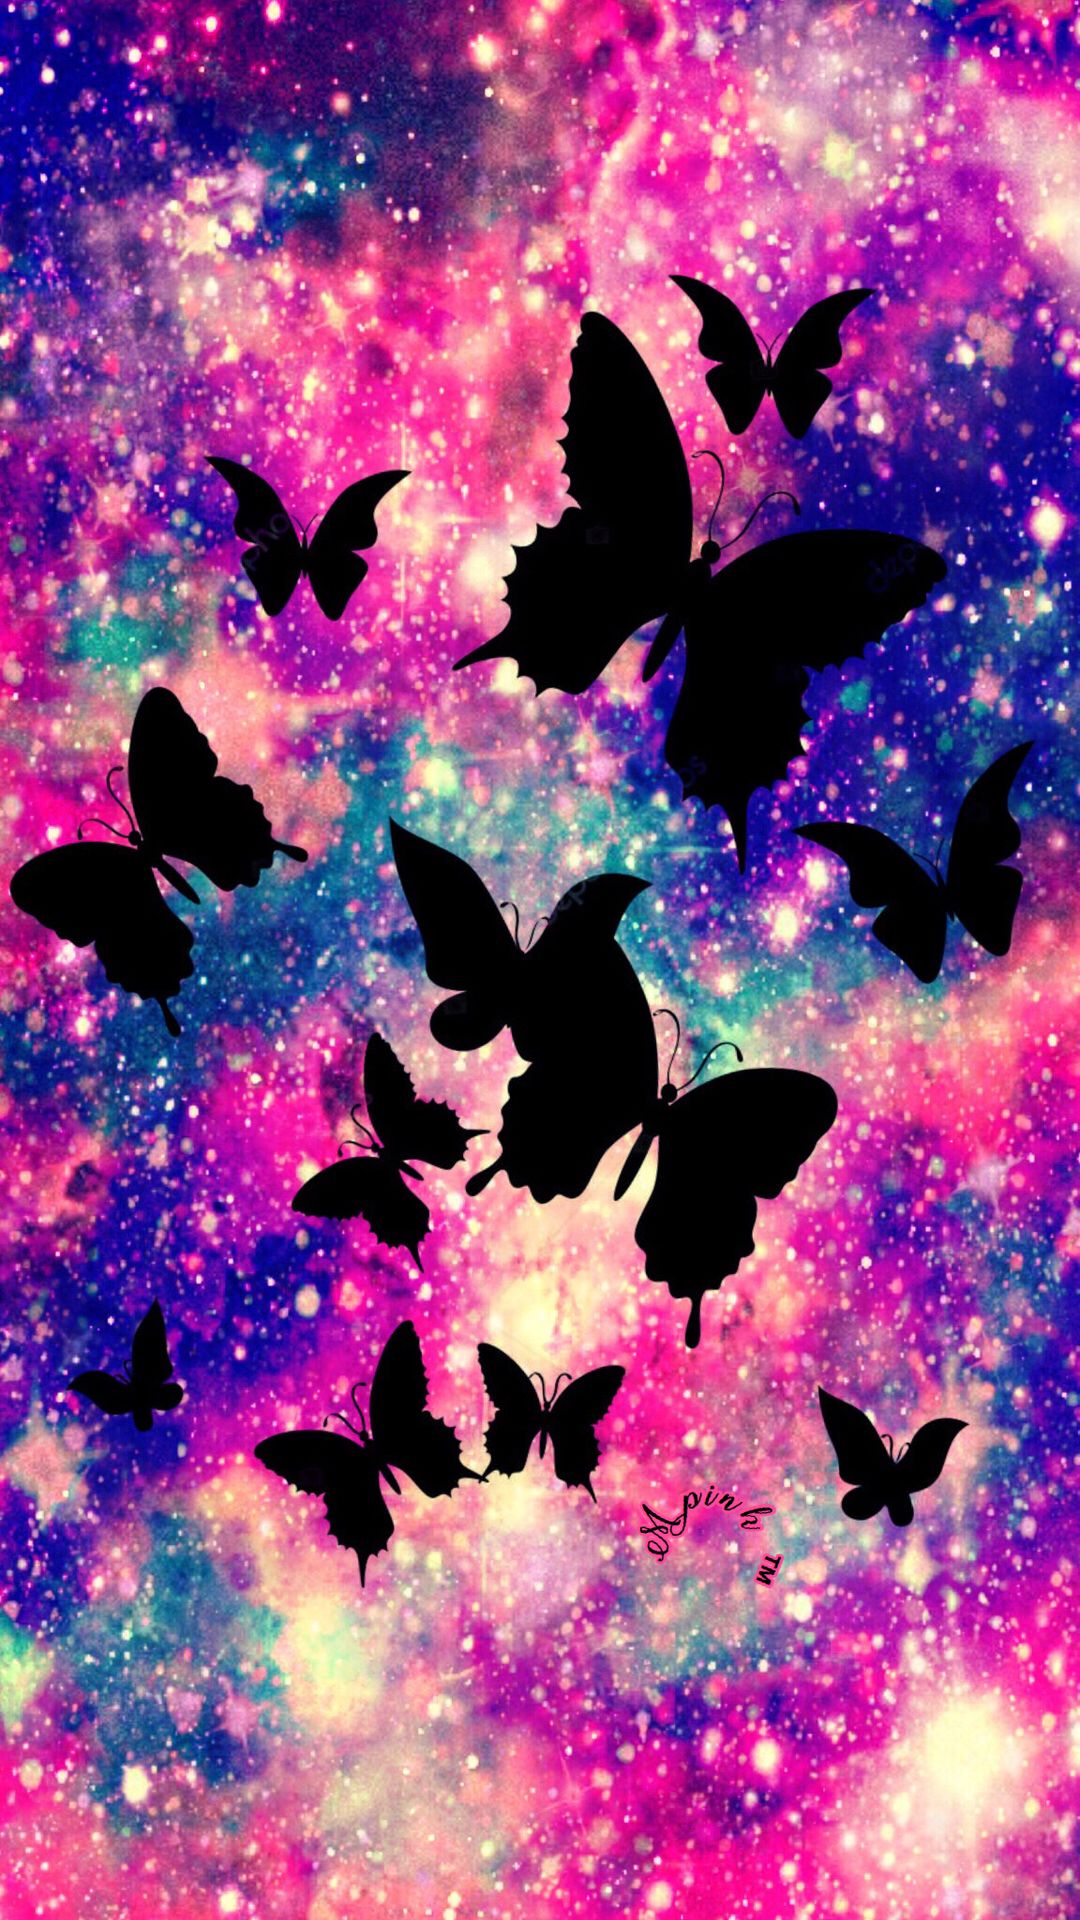 Galaxy Butterfly - 1080x1920 Wallpaper 